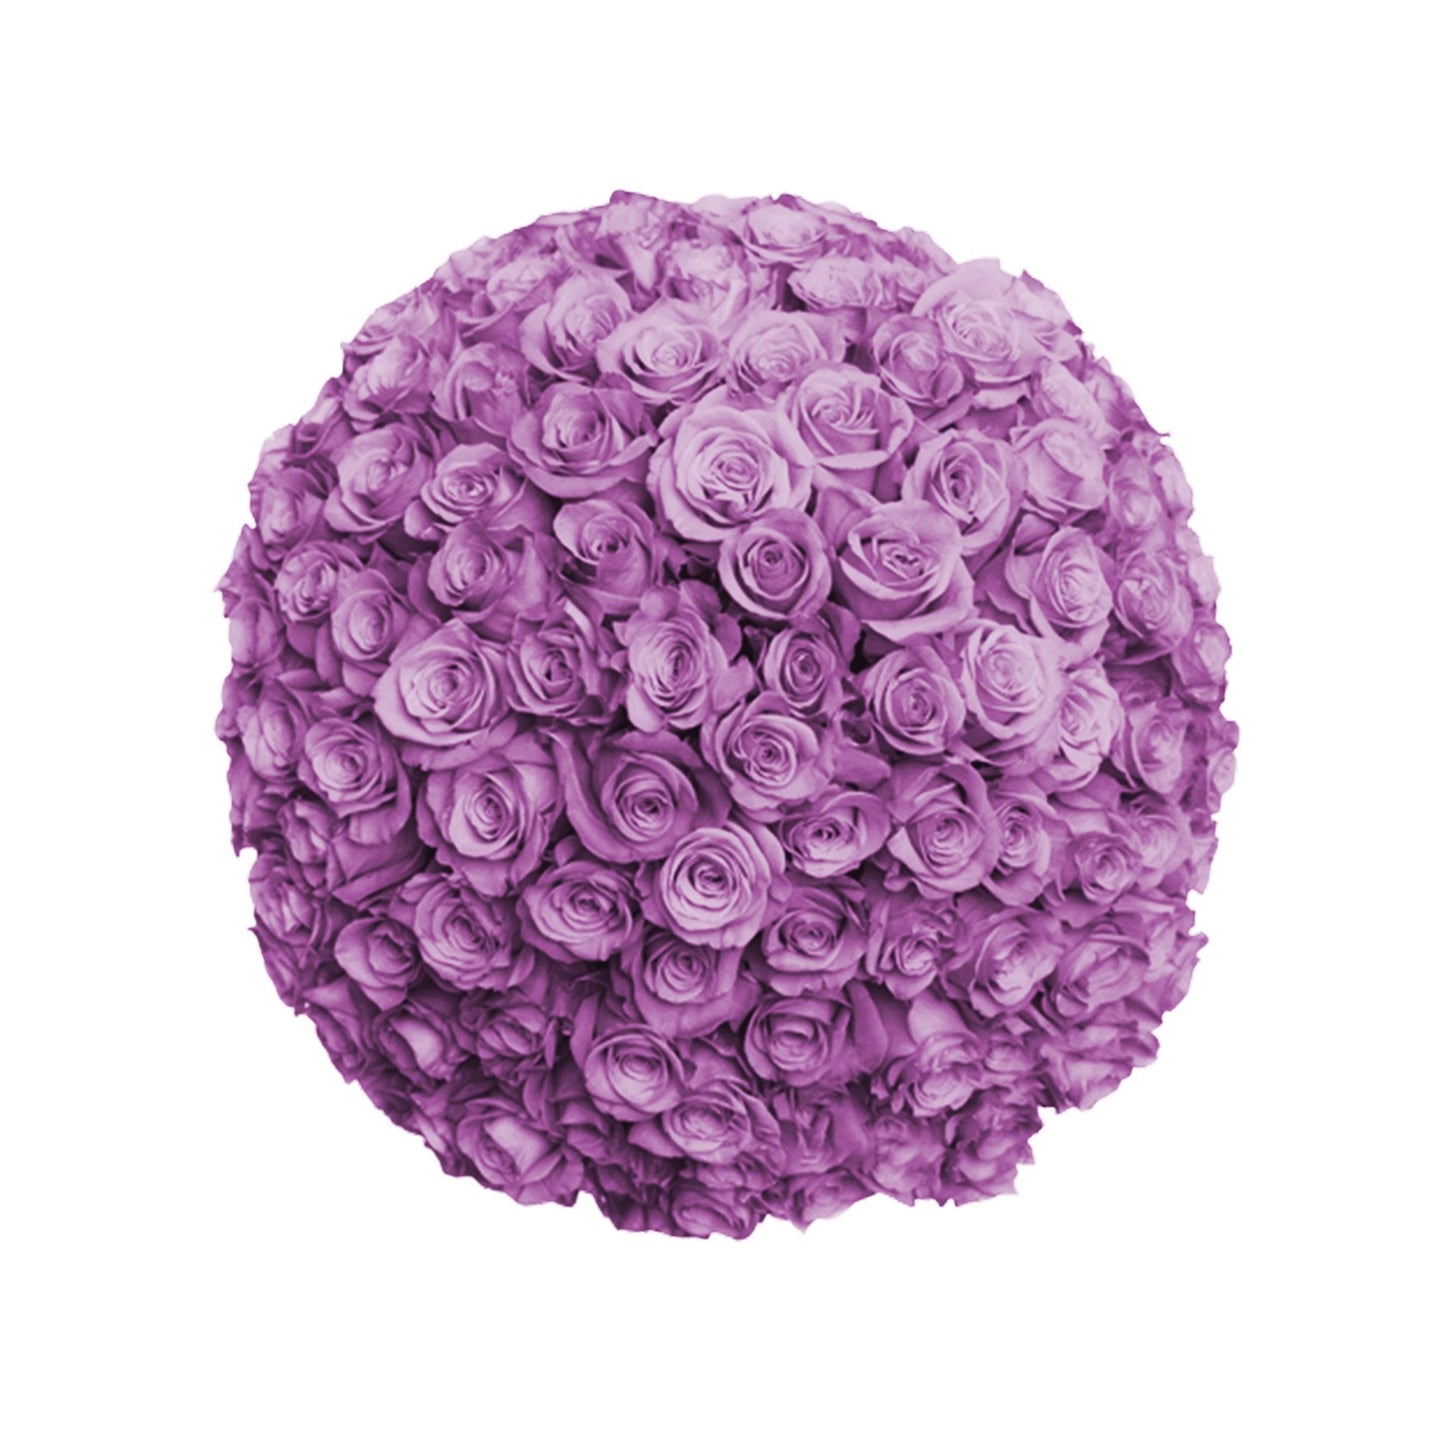 Fresh Roses in a Vase | 100 Purple Roses - Floral Arrangement - Flower Delivery Brooklyn